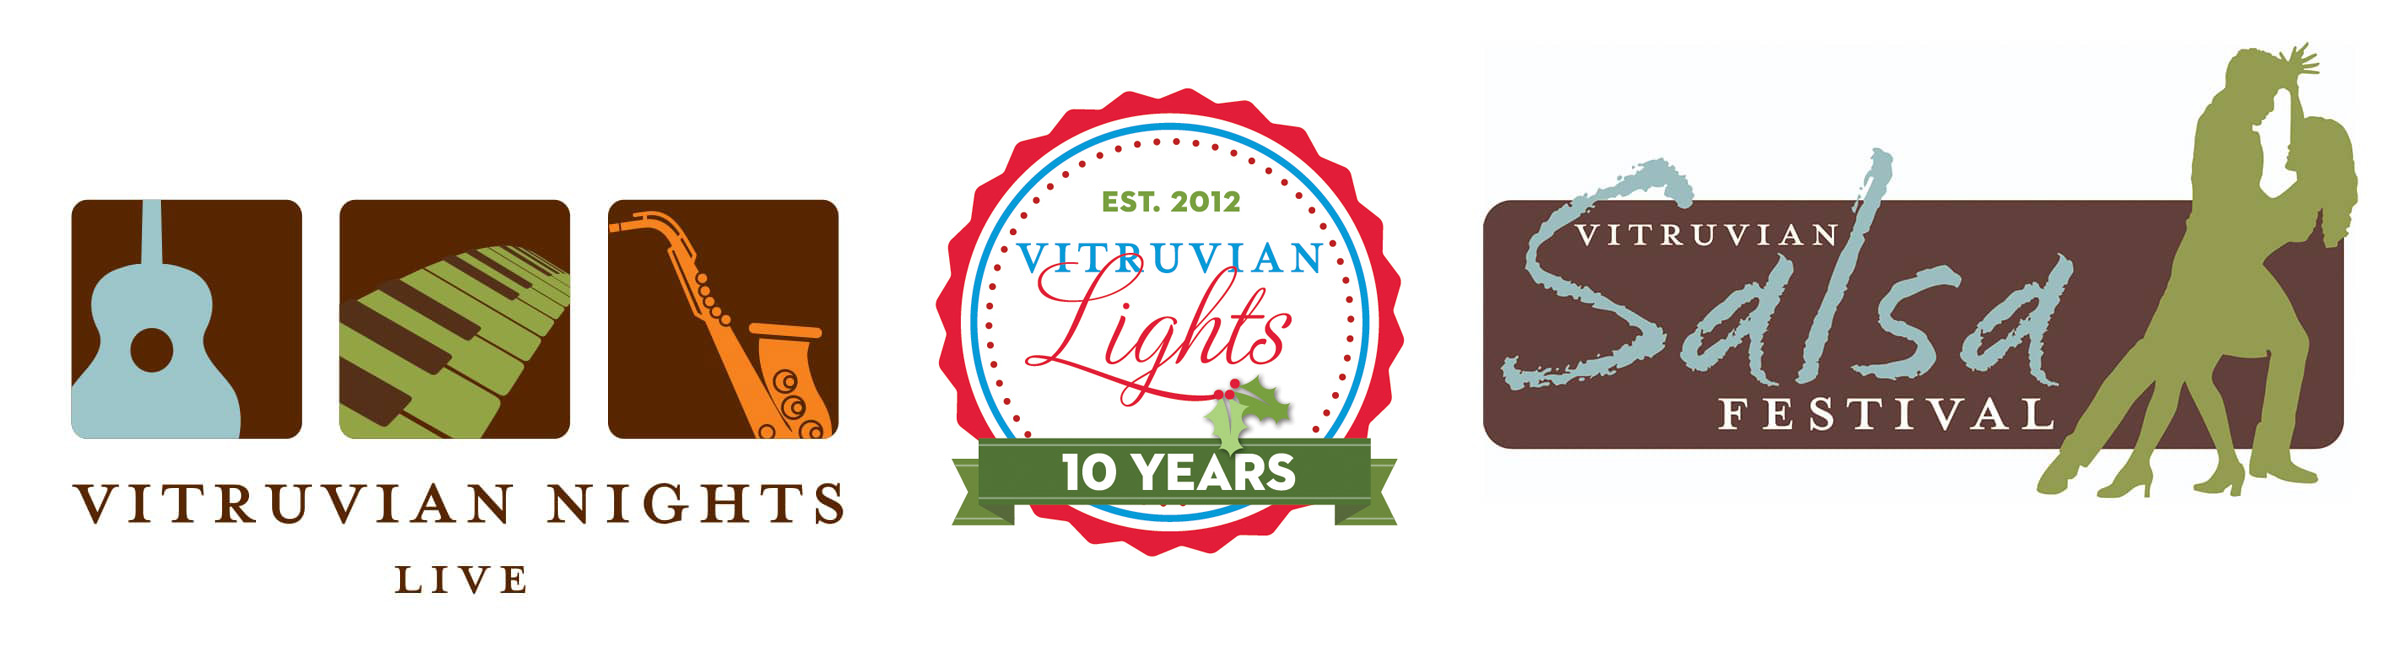 Vitruvian Park events